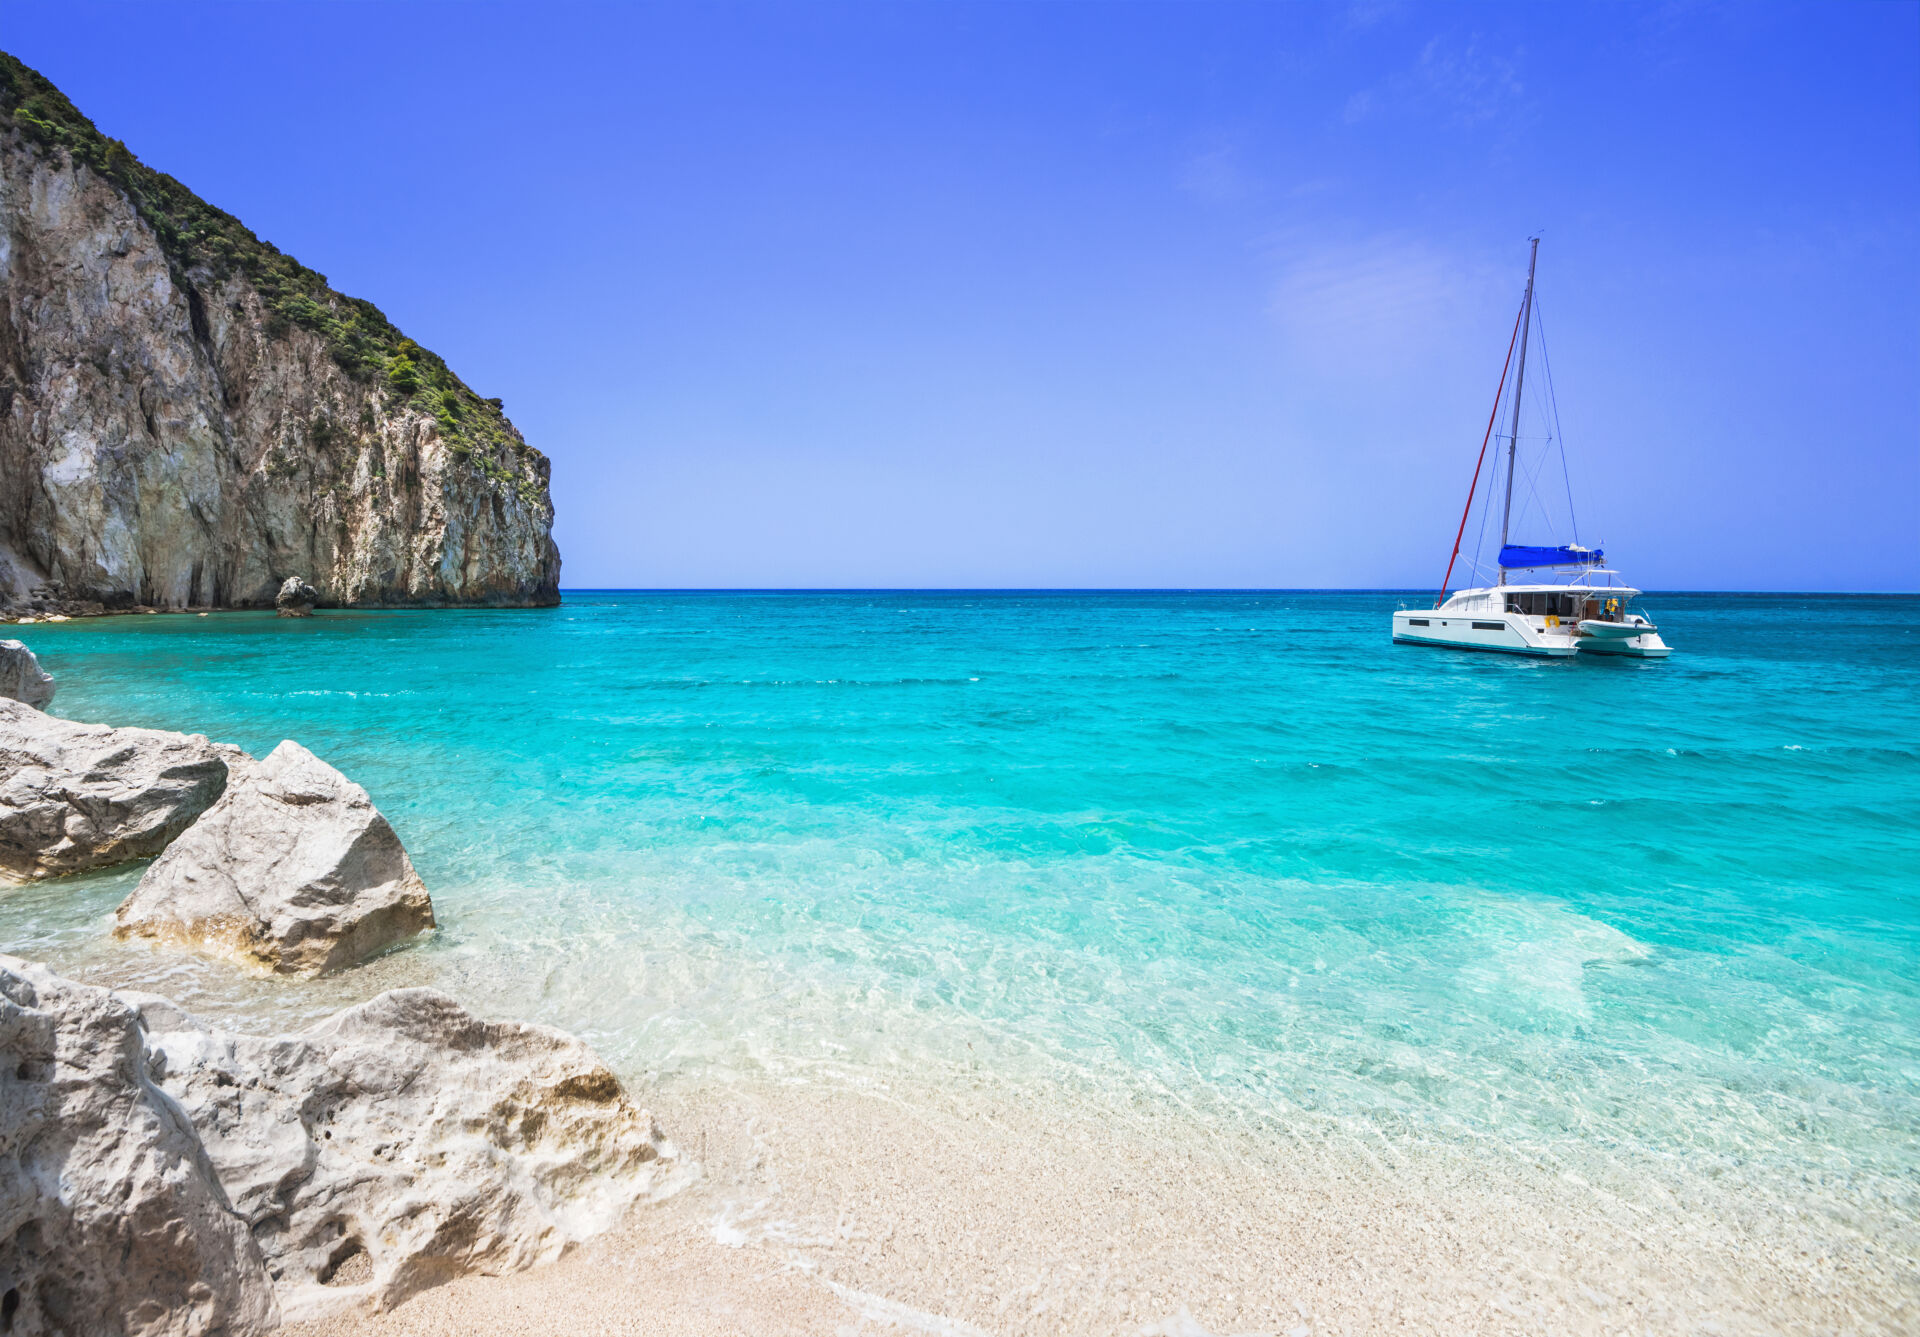 Beautiful lagoon with sailing boat and beach, Lefkada island, Greece